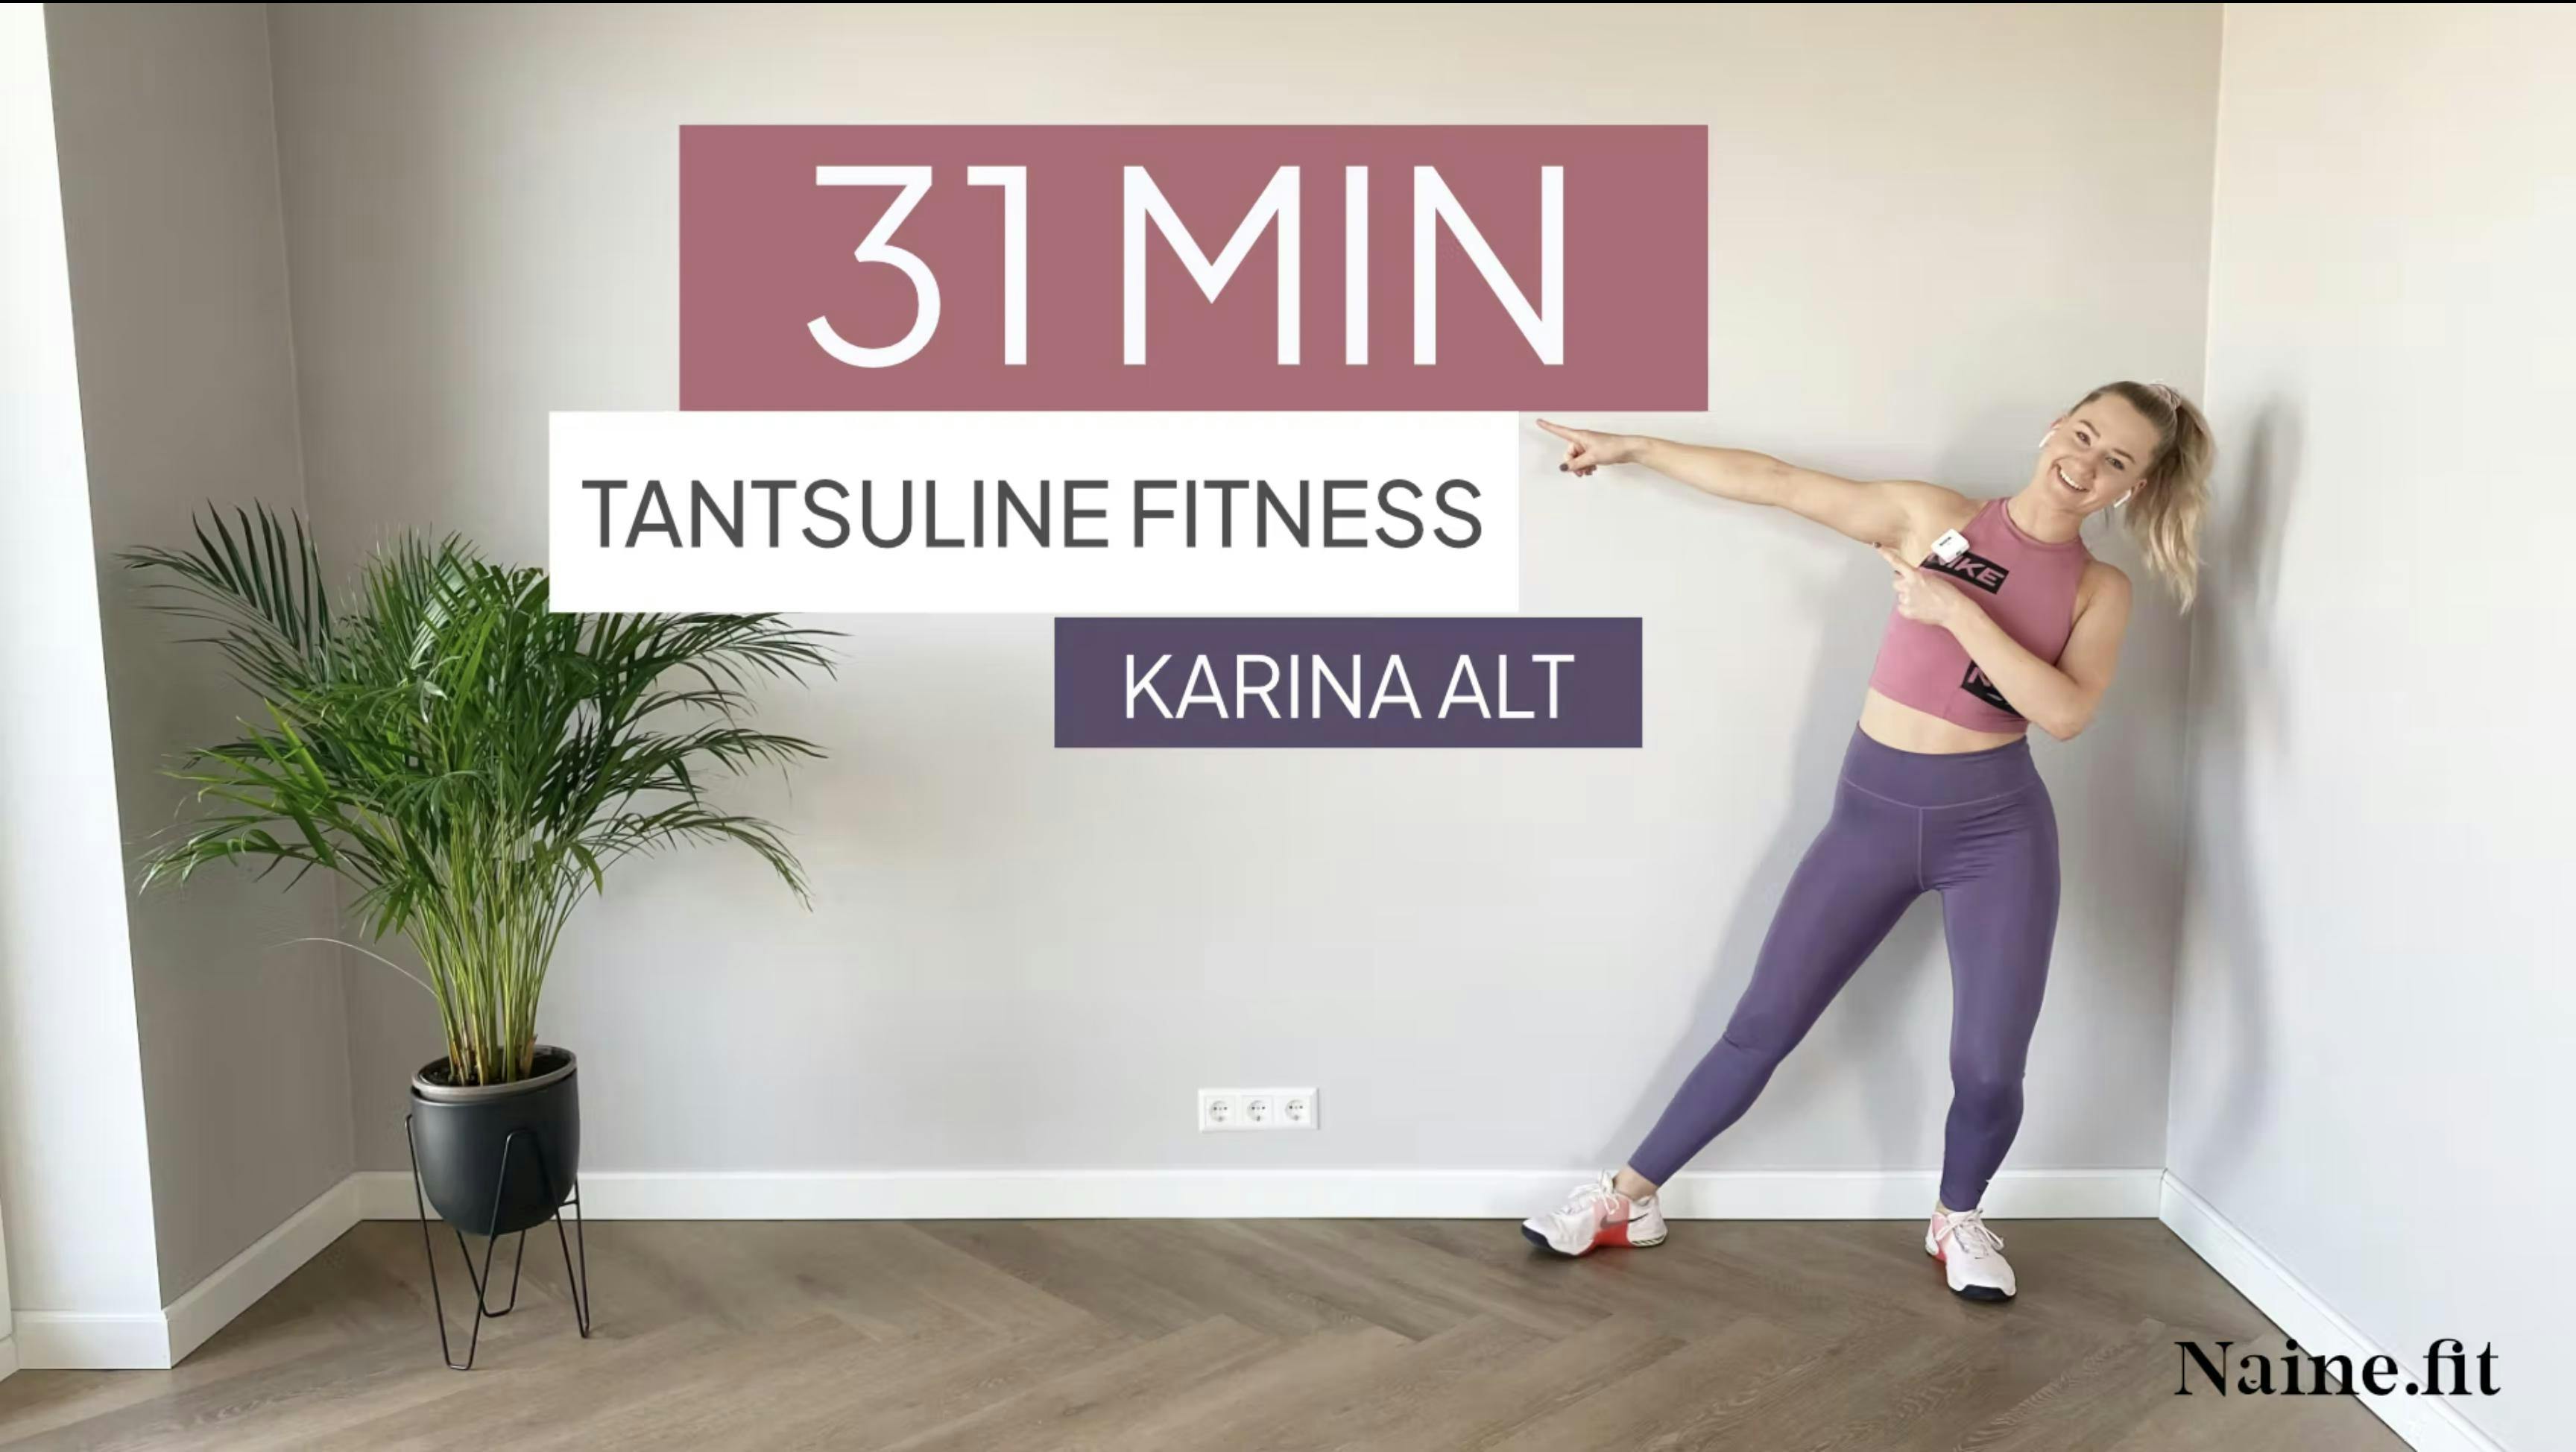 Tantsuline fitness